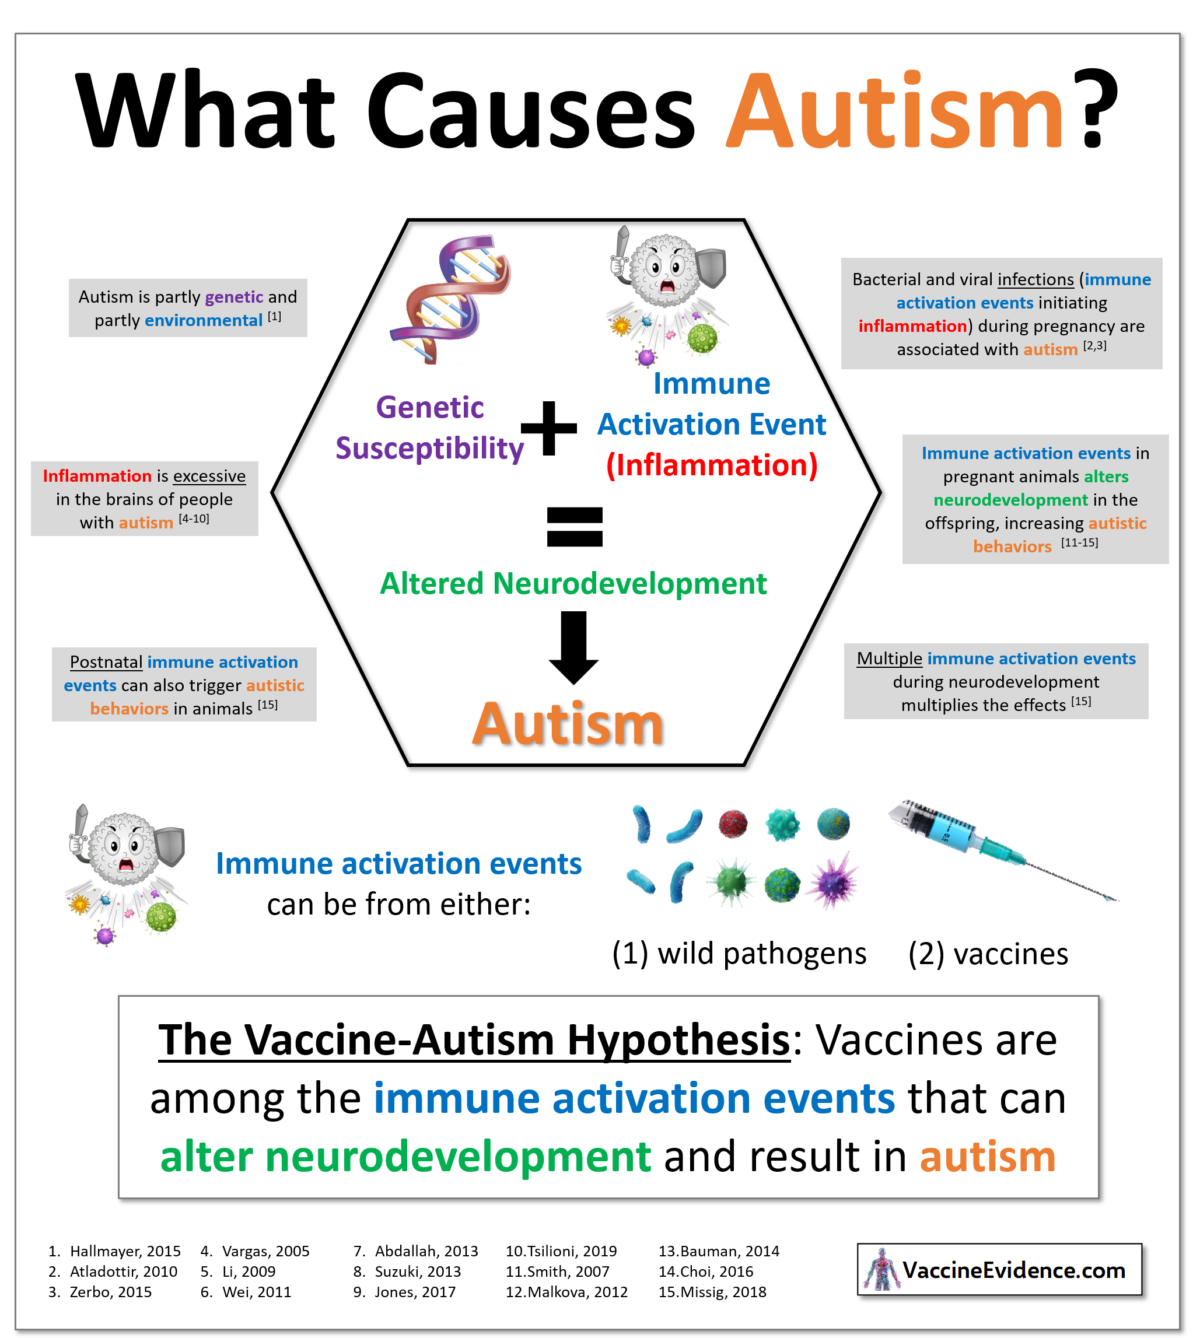 The Vaccine-Autism Hypothesis